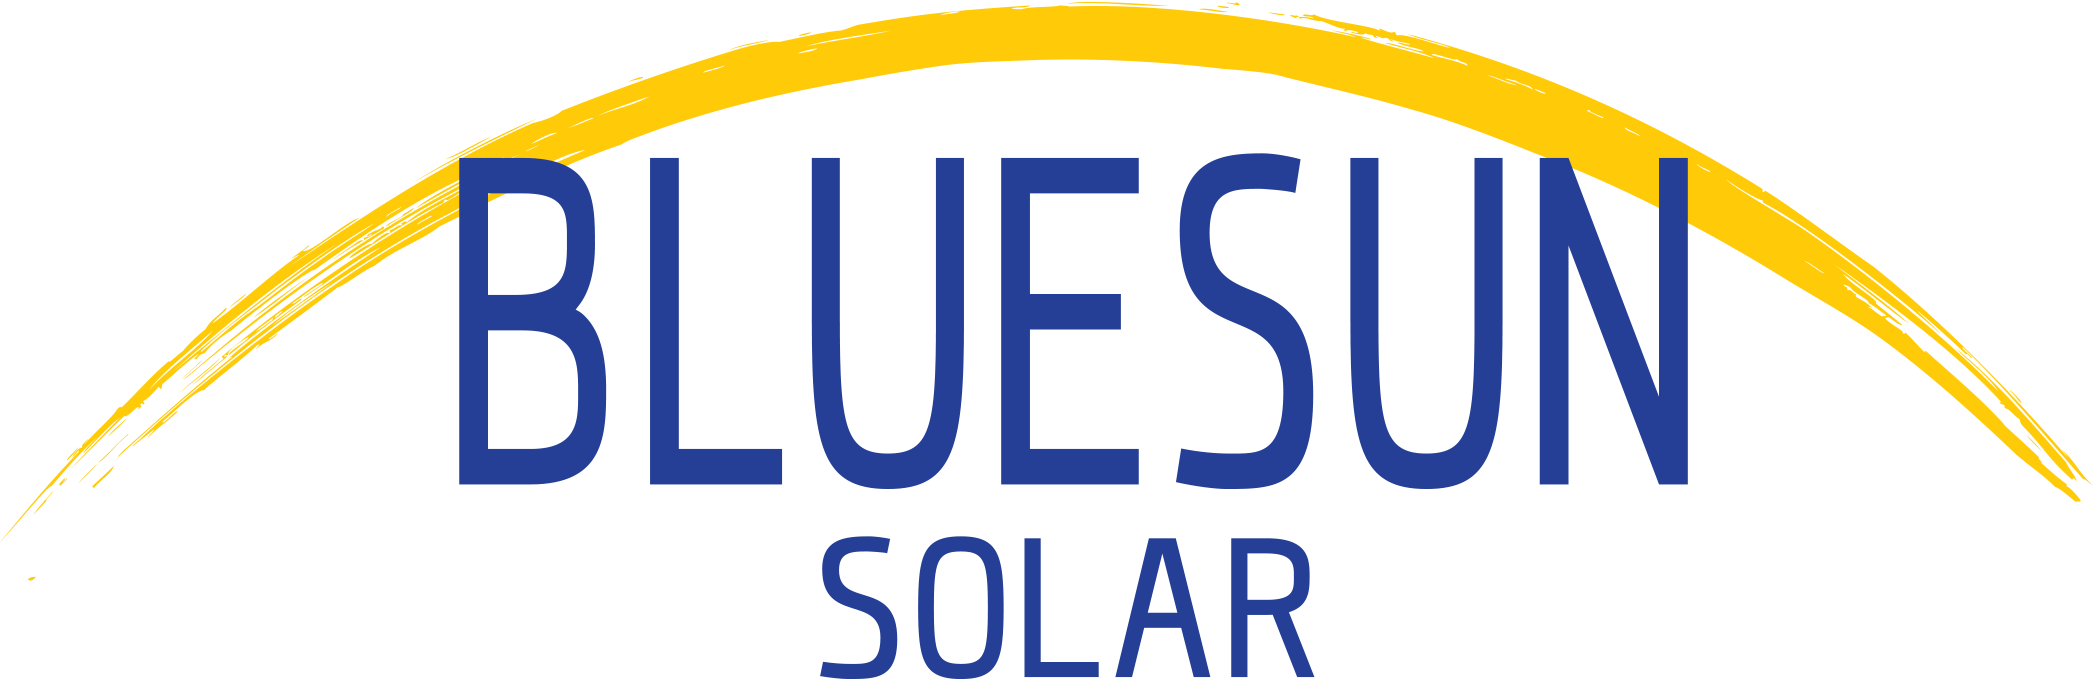 Bluesun Solar Llc - Solar Power (2093x679), Png Download